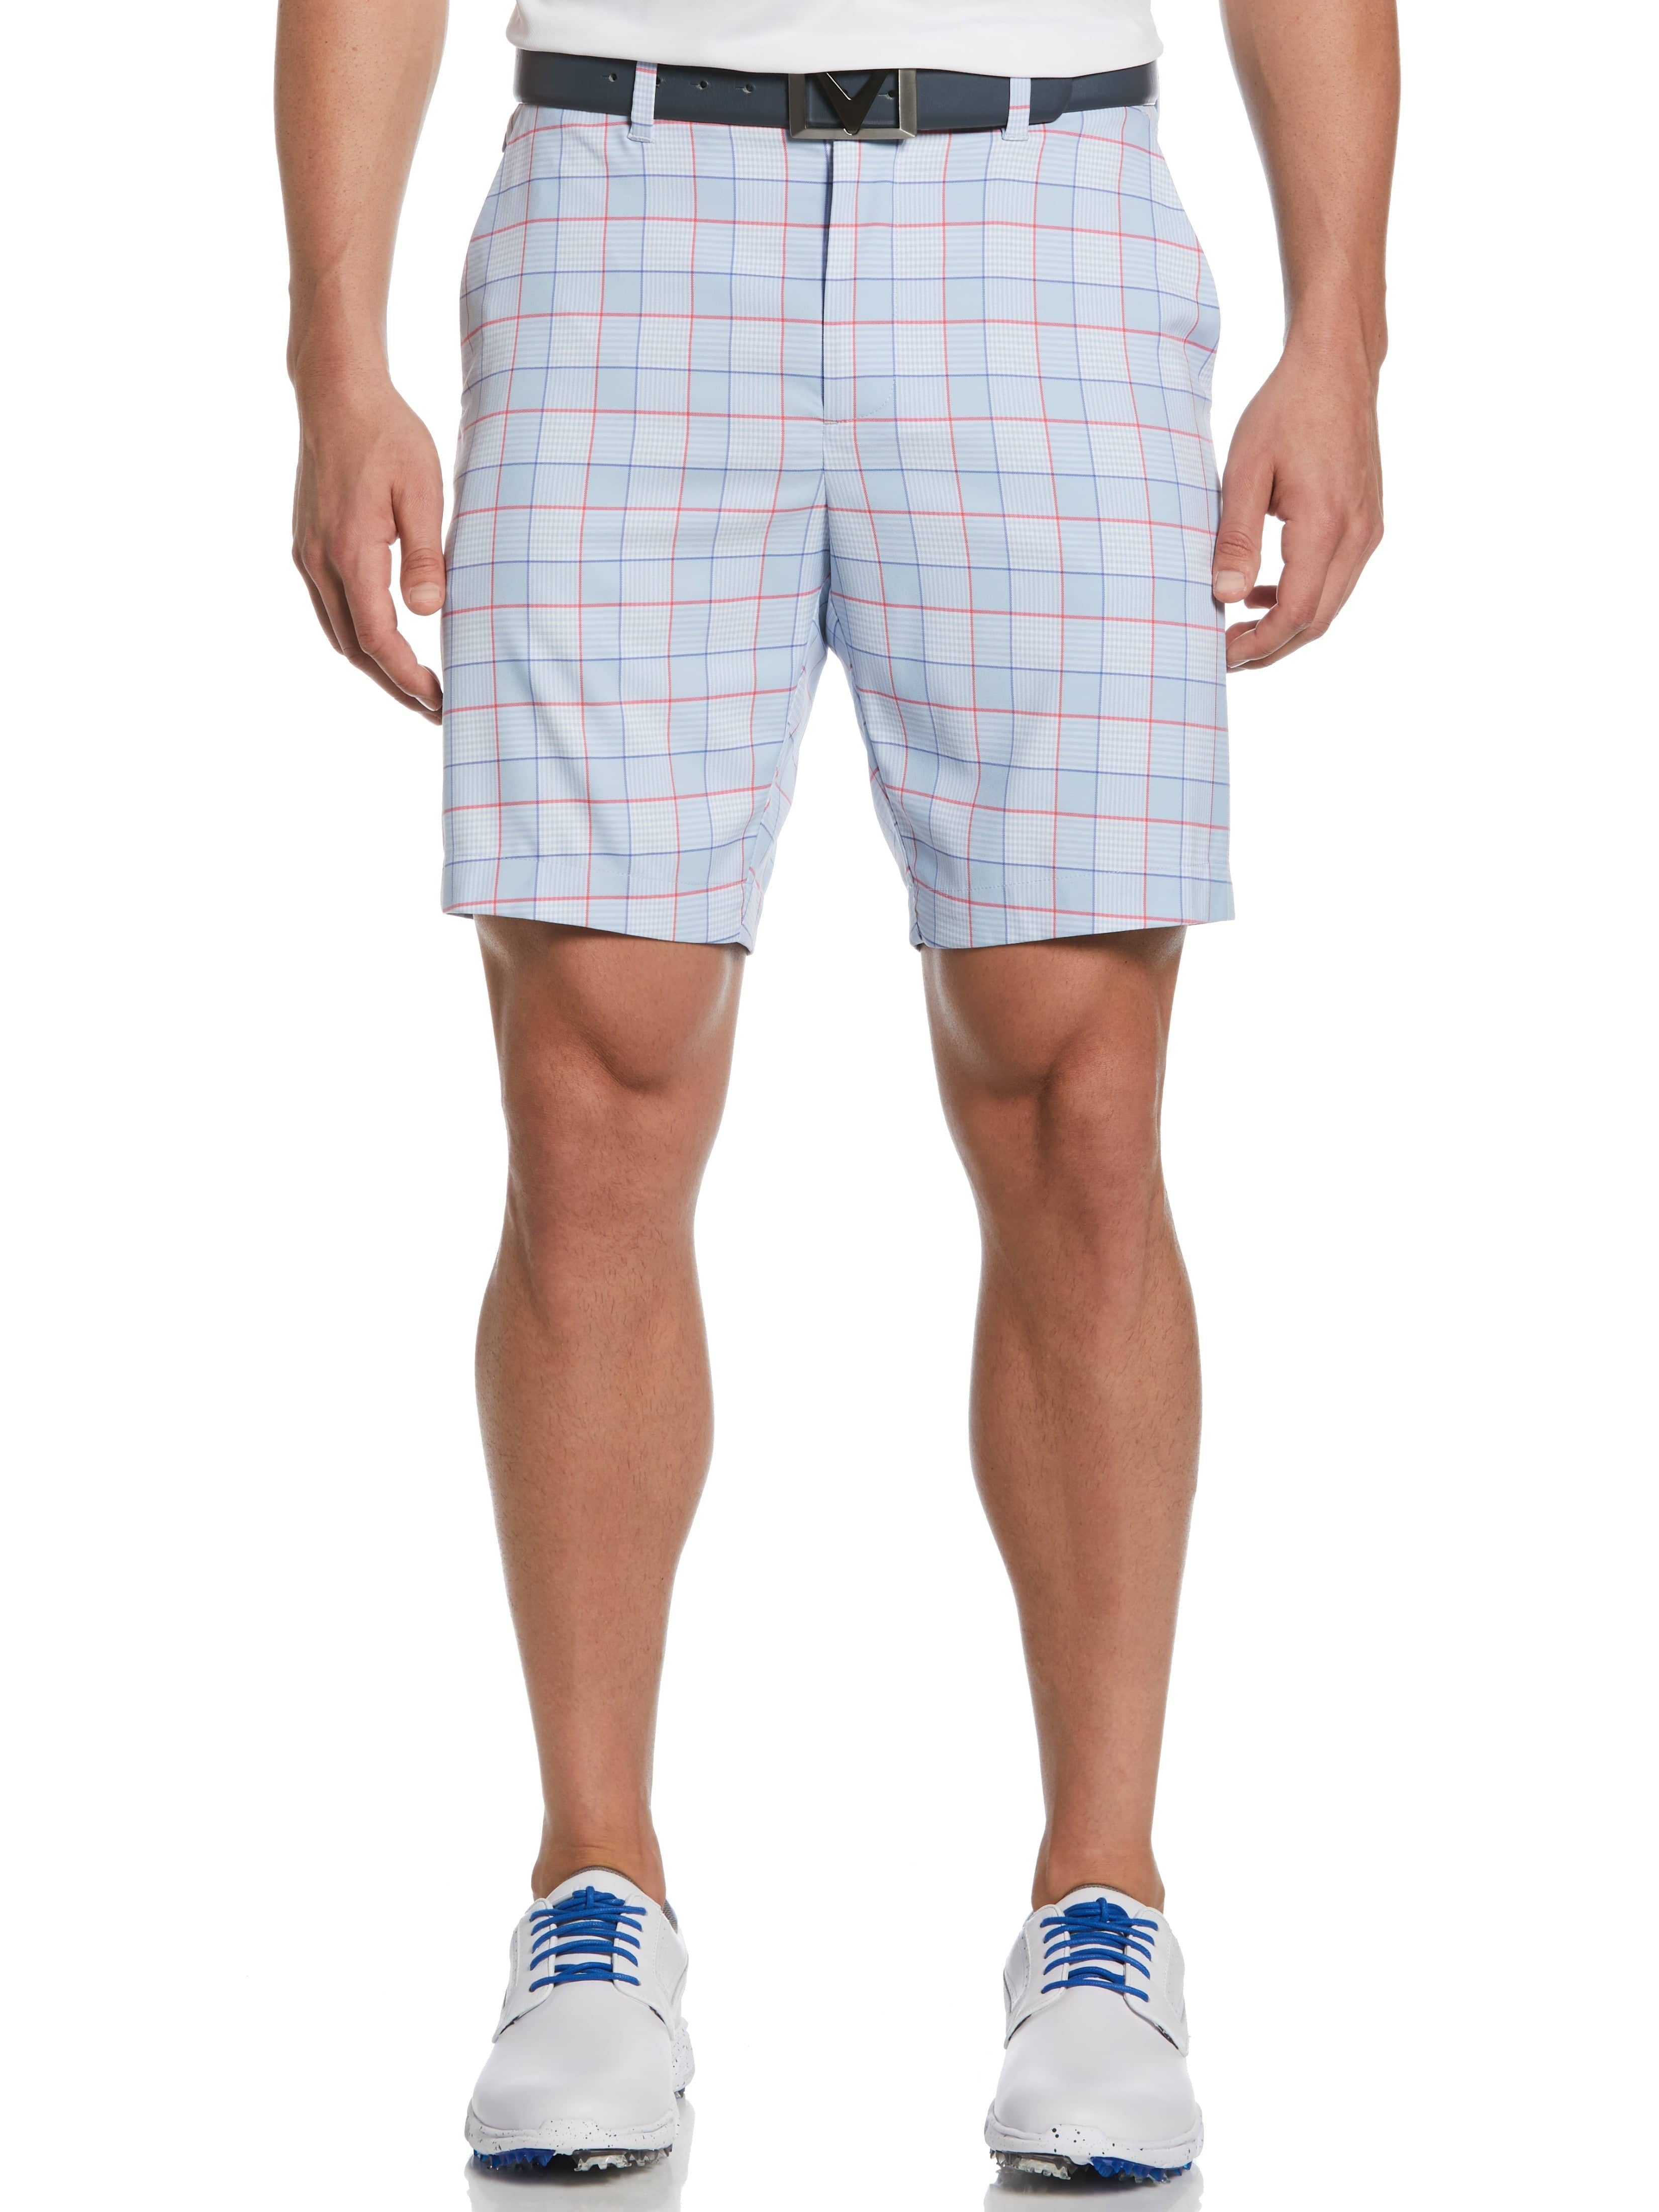 Callaway Apparel Mens Flat Front Yarn Dye Heritage Plaid Ergo Golf Shorts, Size 38, Chambray Blue, Poly Blend | Golf Apparel Shop